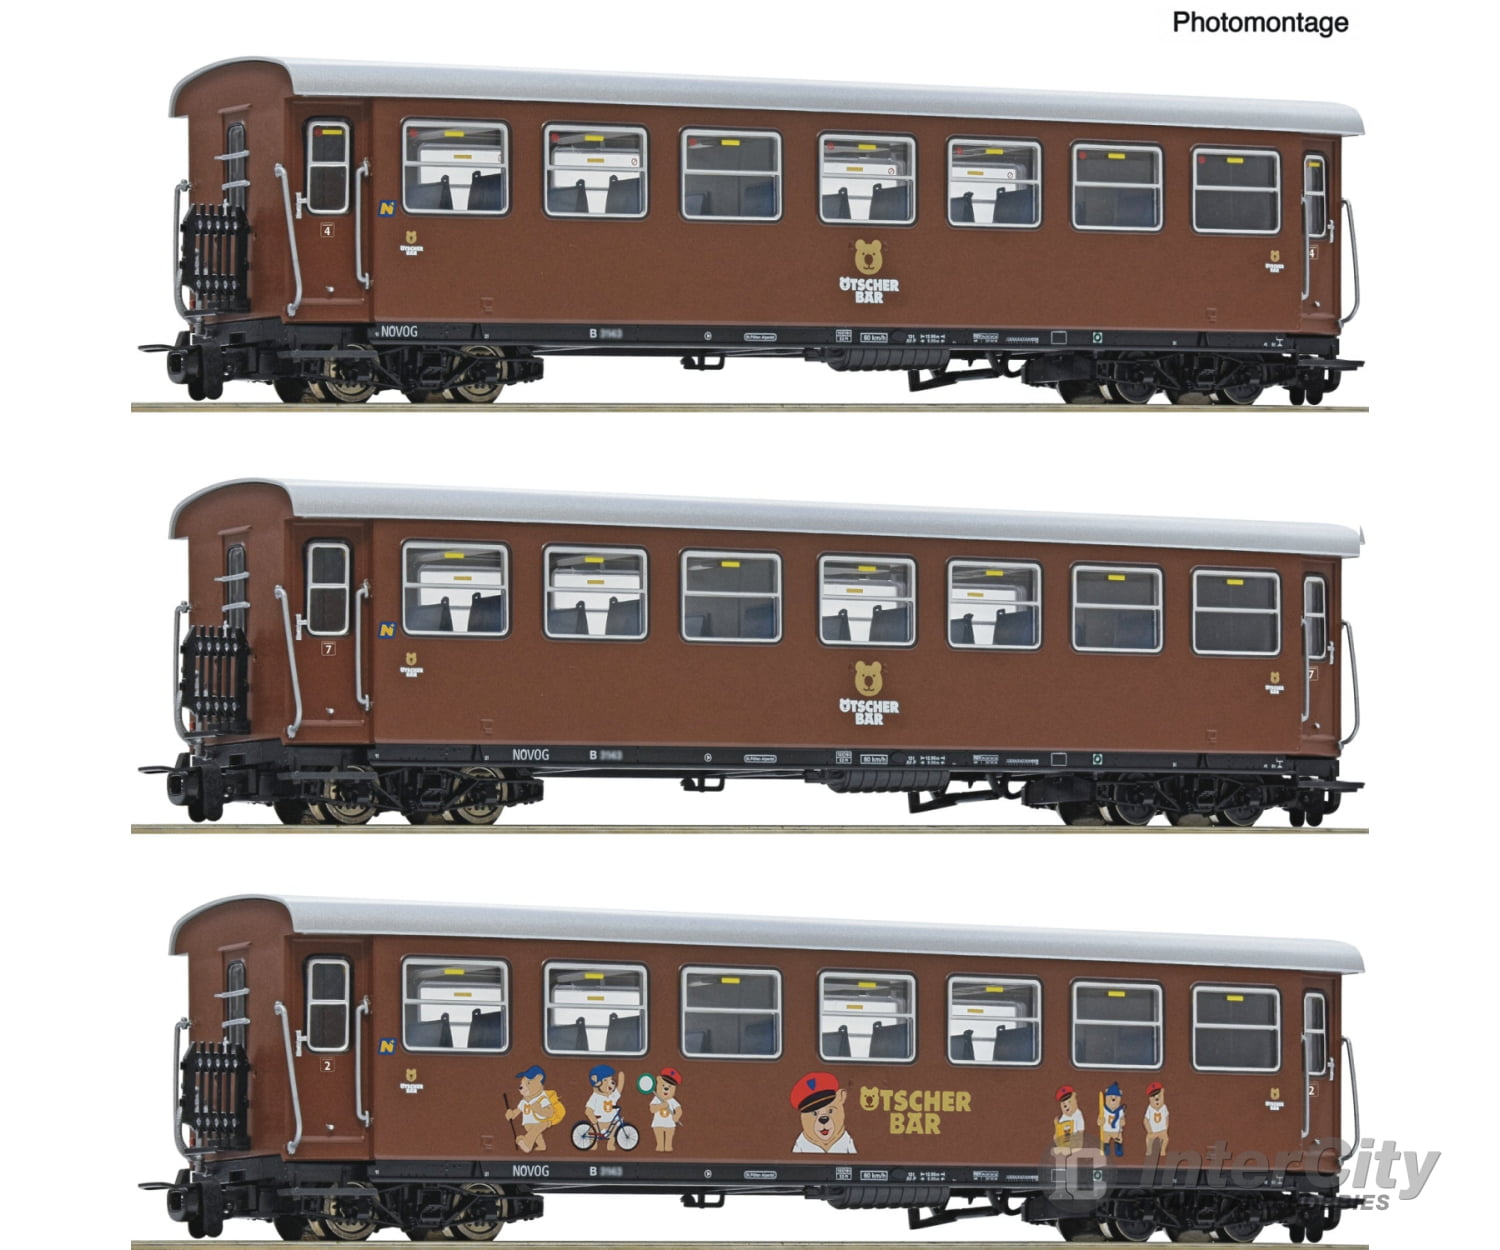 Roco 6240002 Hoe 3-Piece Set: “Ötscherbär” Passenger Train Növog Era 6 European Passenger Cars